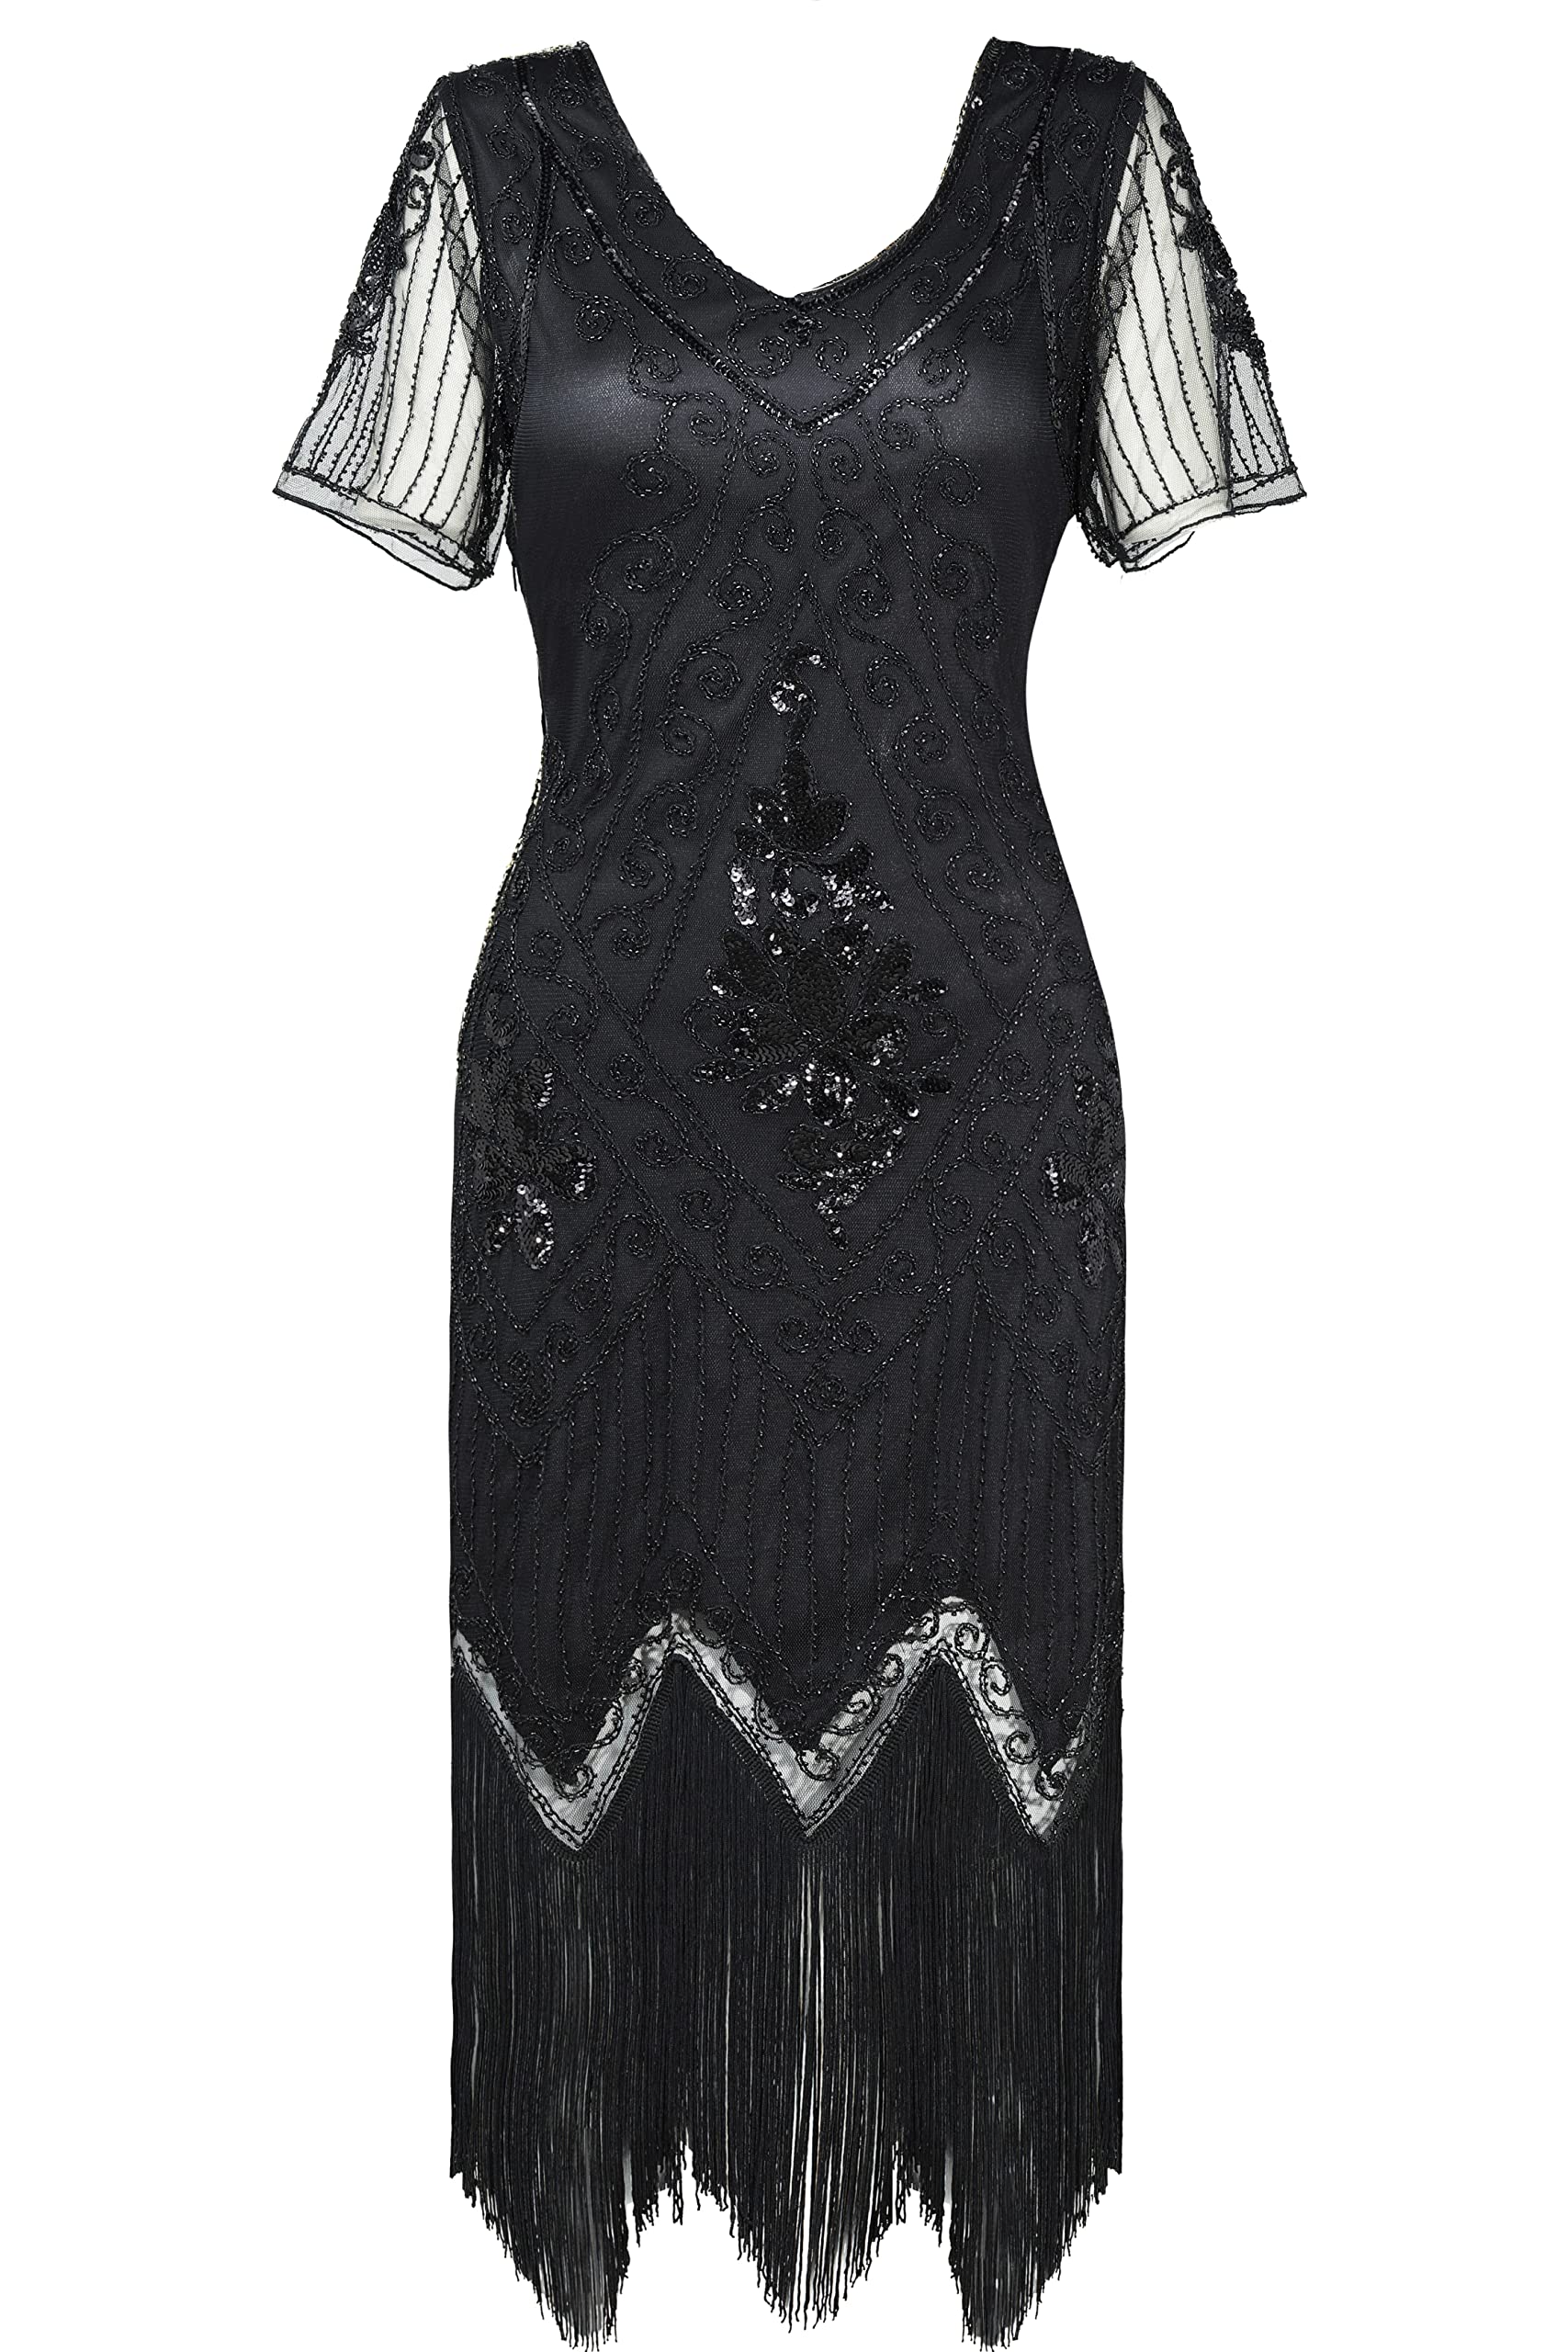 BABEYOND 1920s Art Deco Fringed Sequin Dress Roaring 20s Flapper Fancy Dress Gatsby Costume Dress